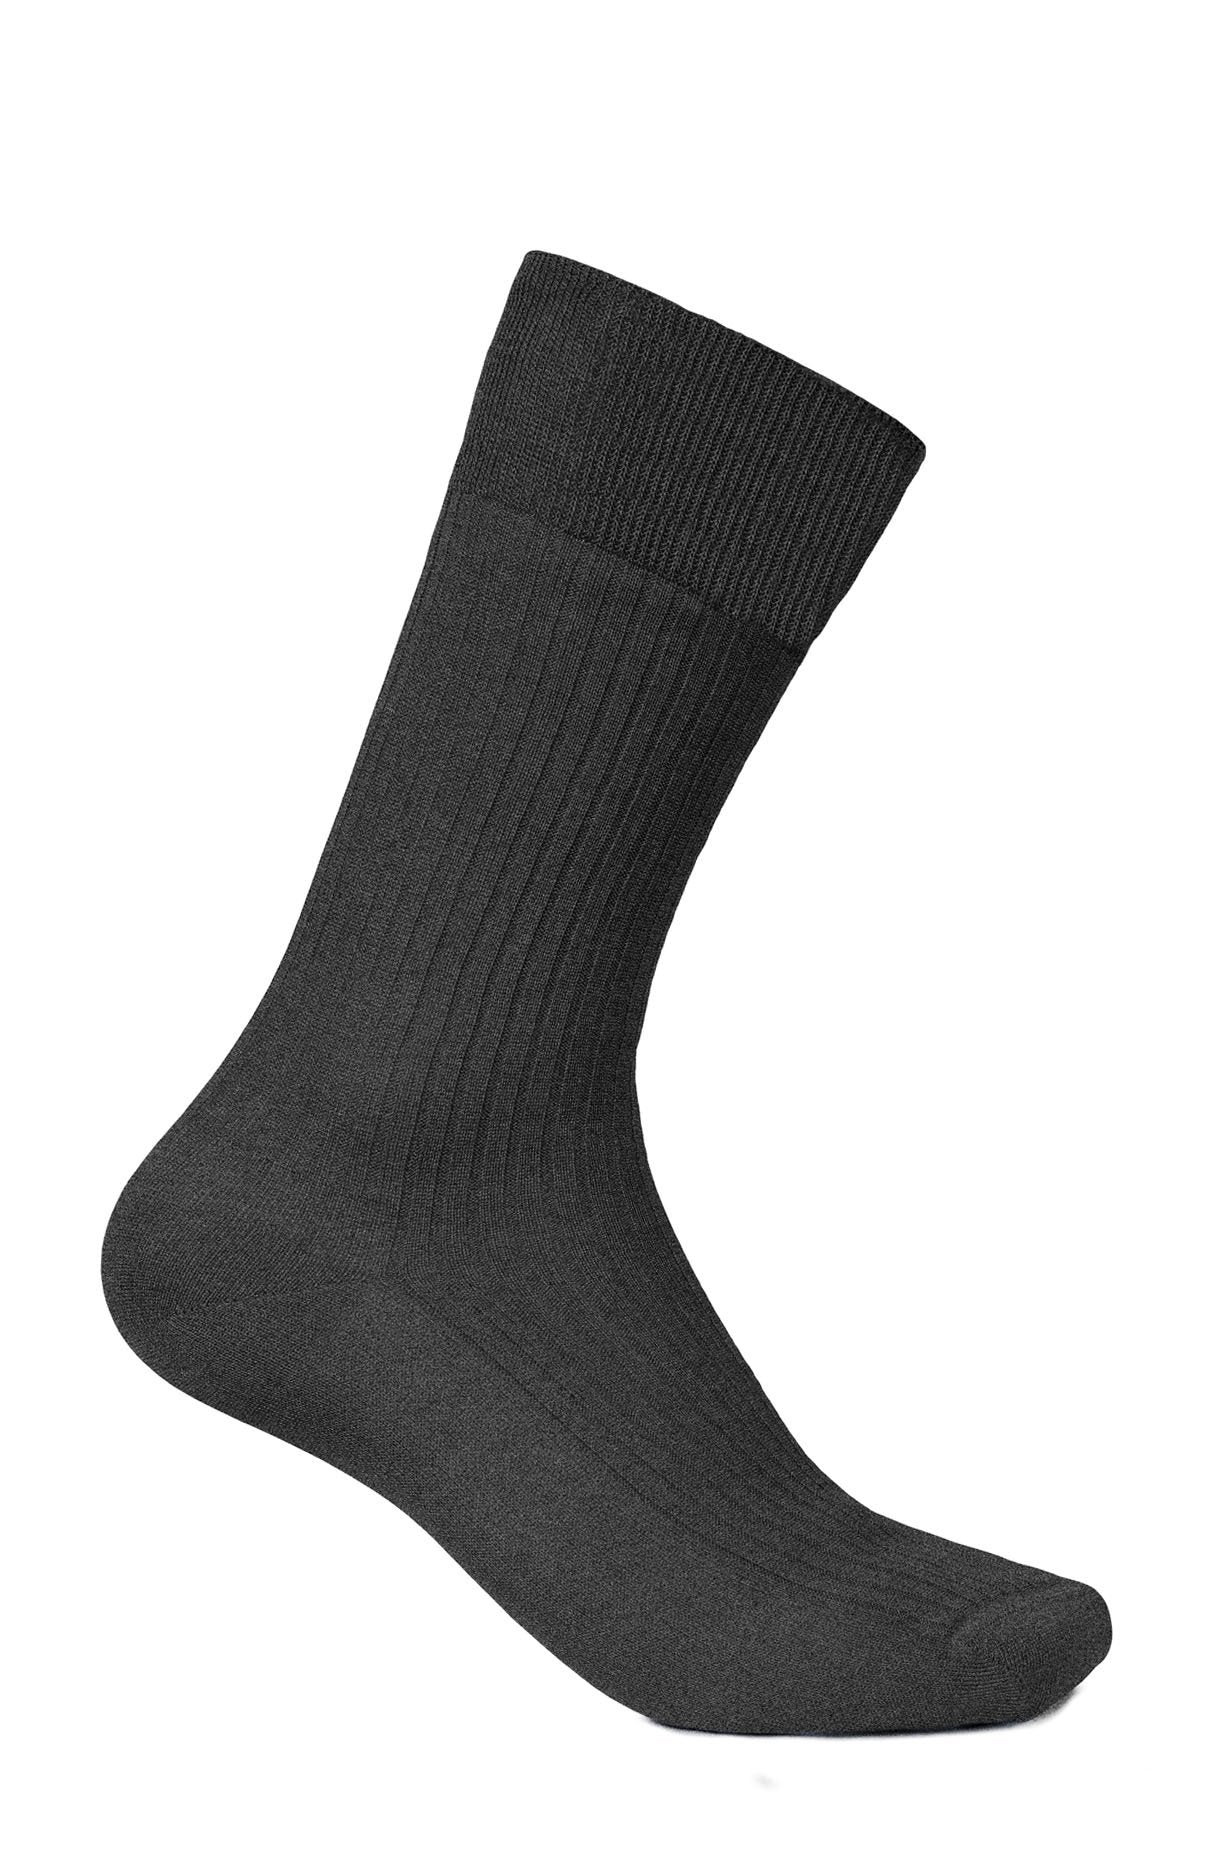 Anthracite Pack of 2 socks - Scottish thread